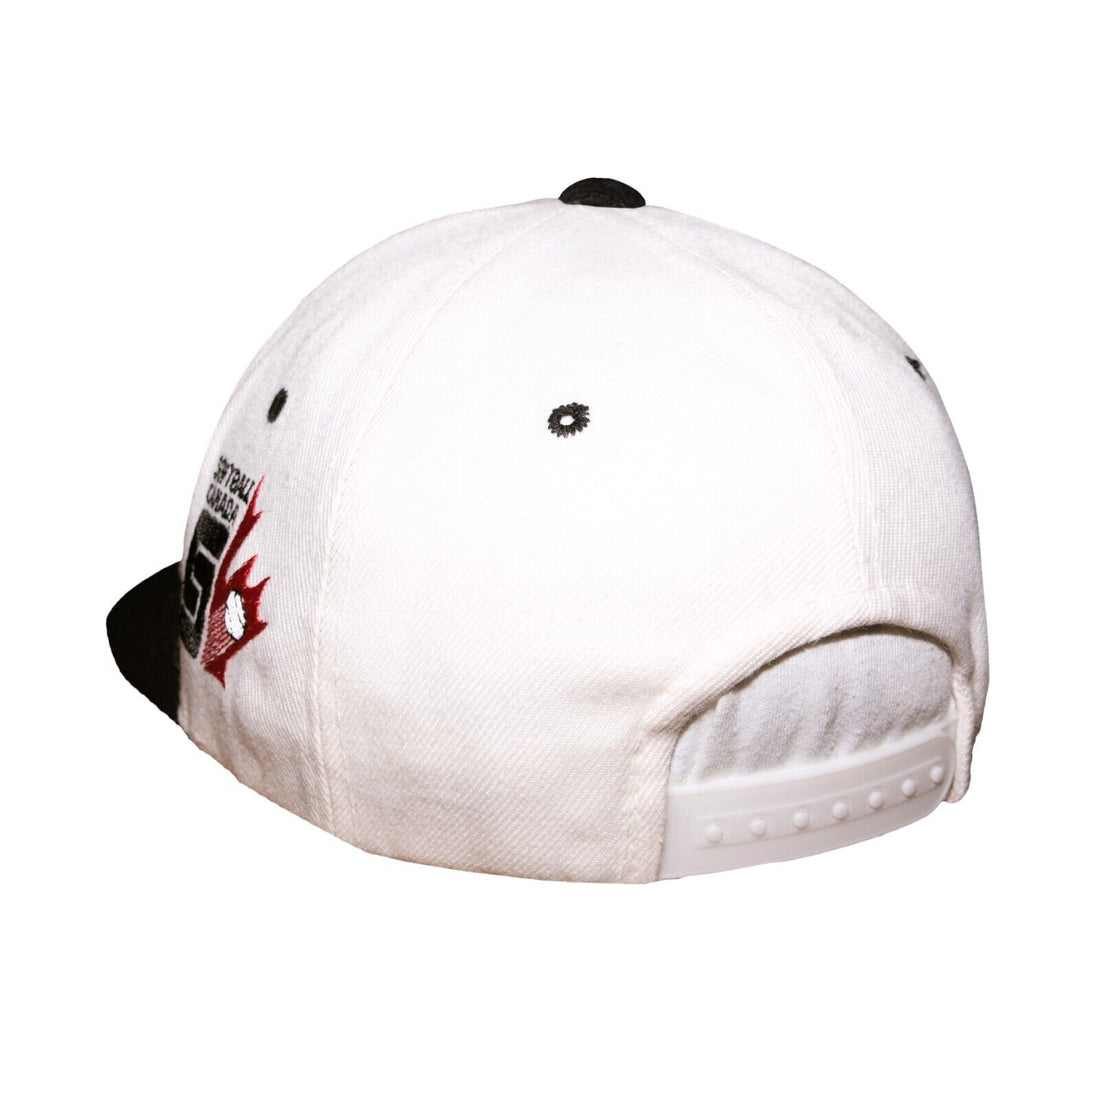 Vintage Softball Canada Umpire AJM Snapback Hat OSFA White Wrap Around 90s